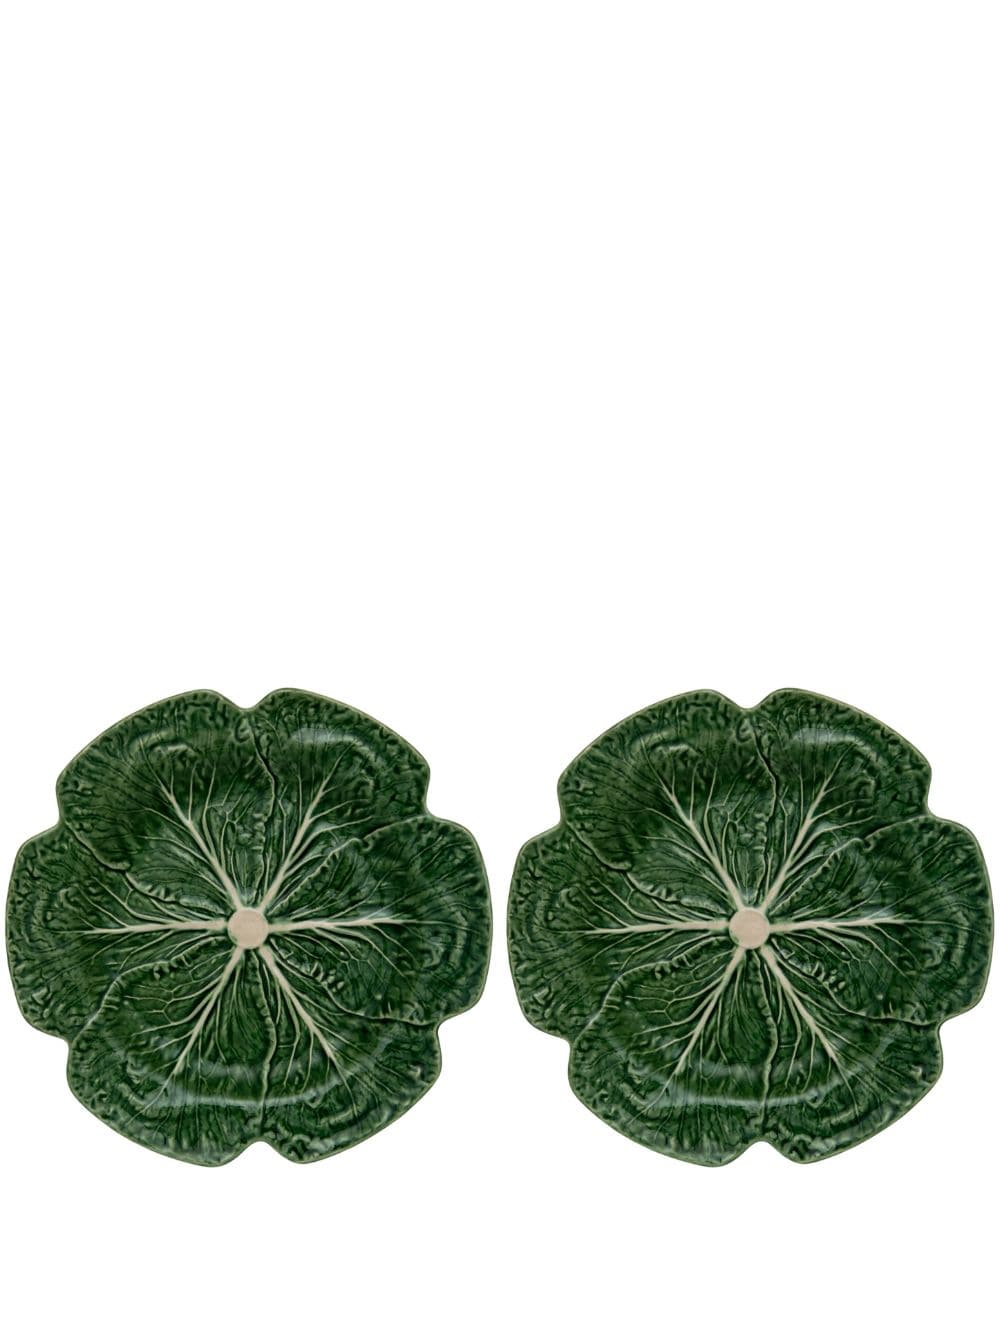 Bordallo Pinheiro Couve charger plates (set of two) - Green von Bordallo Pinheiro